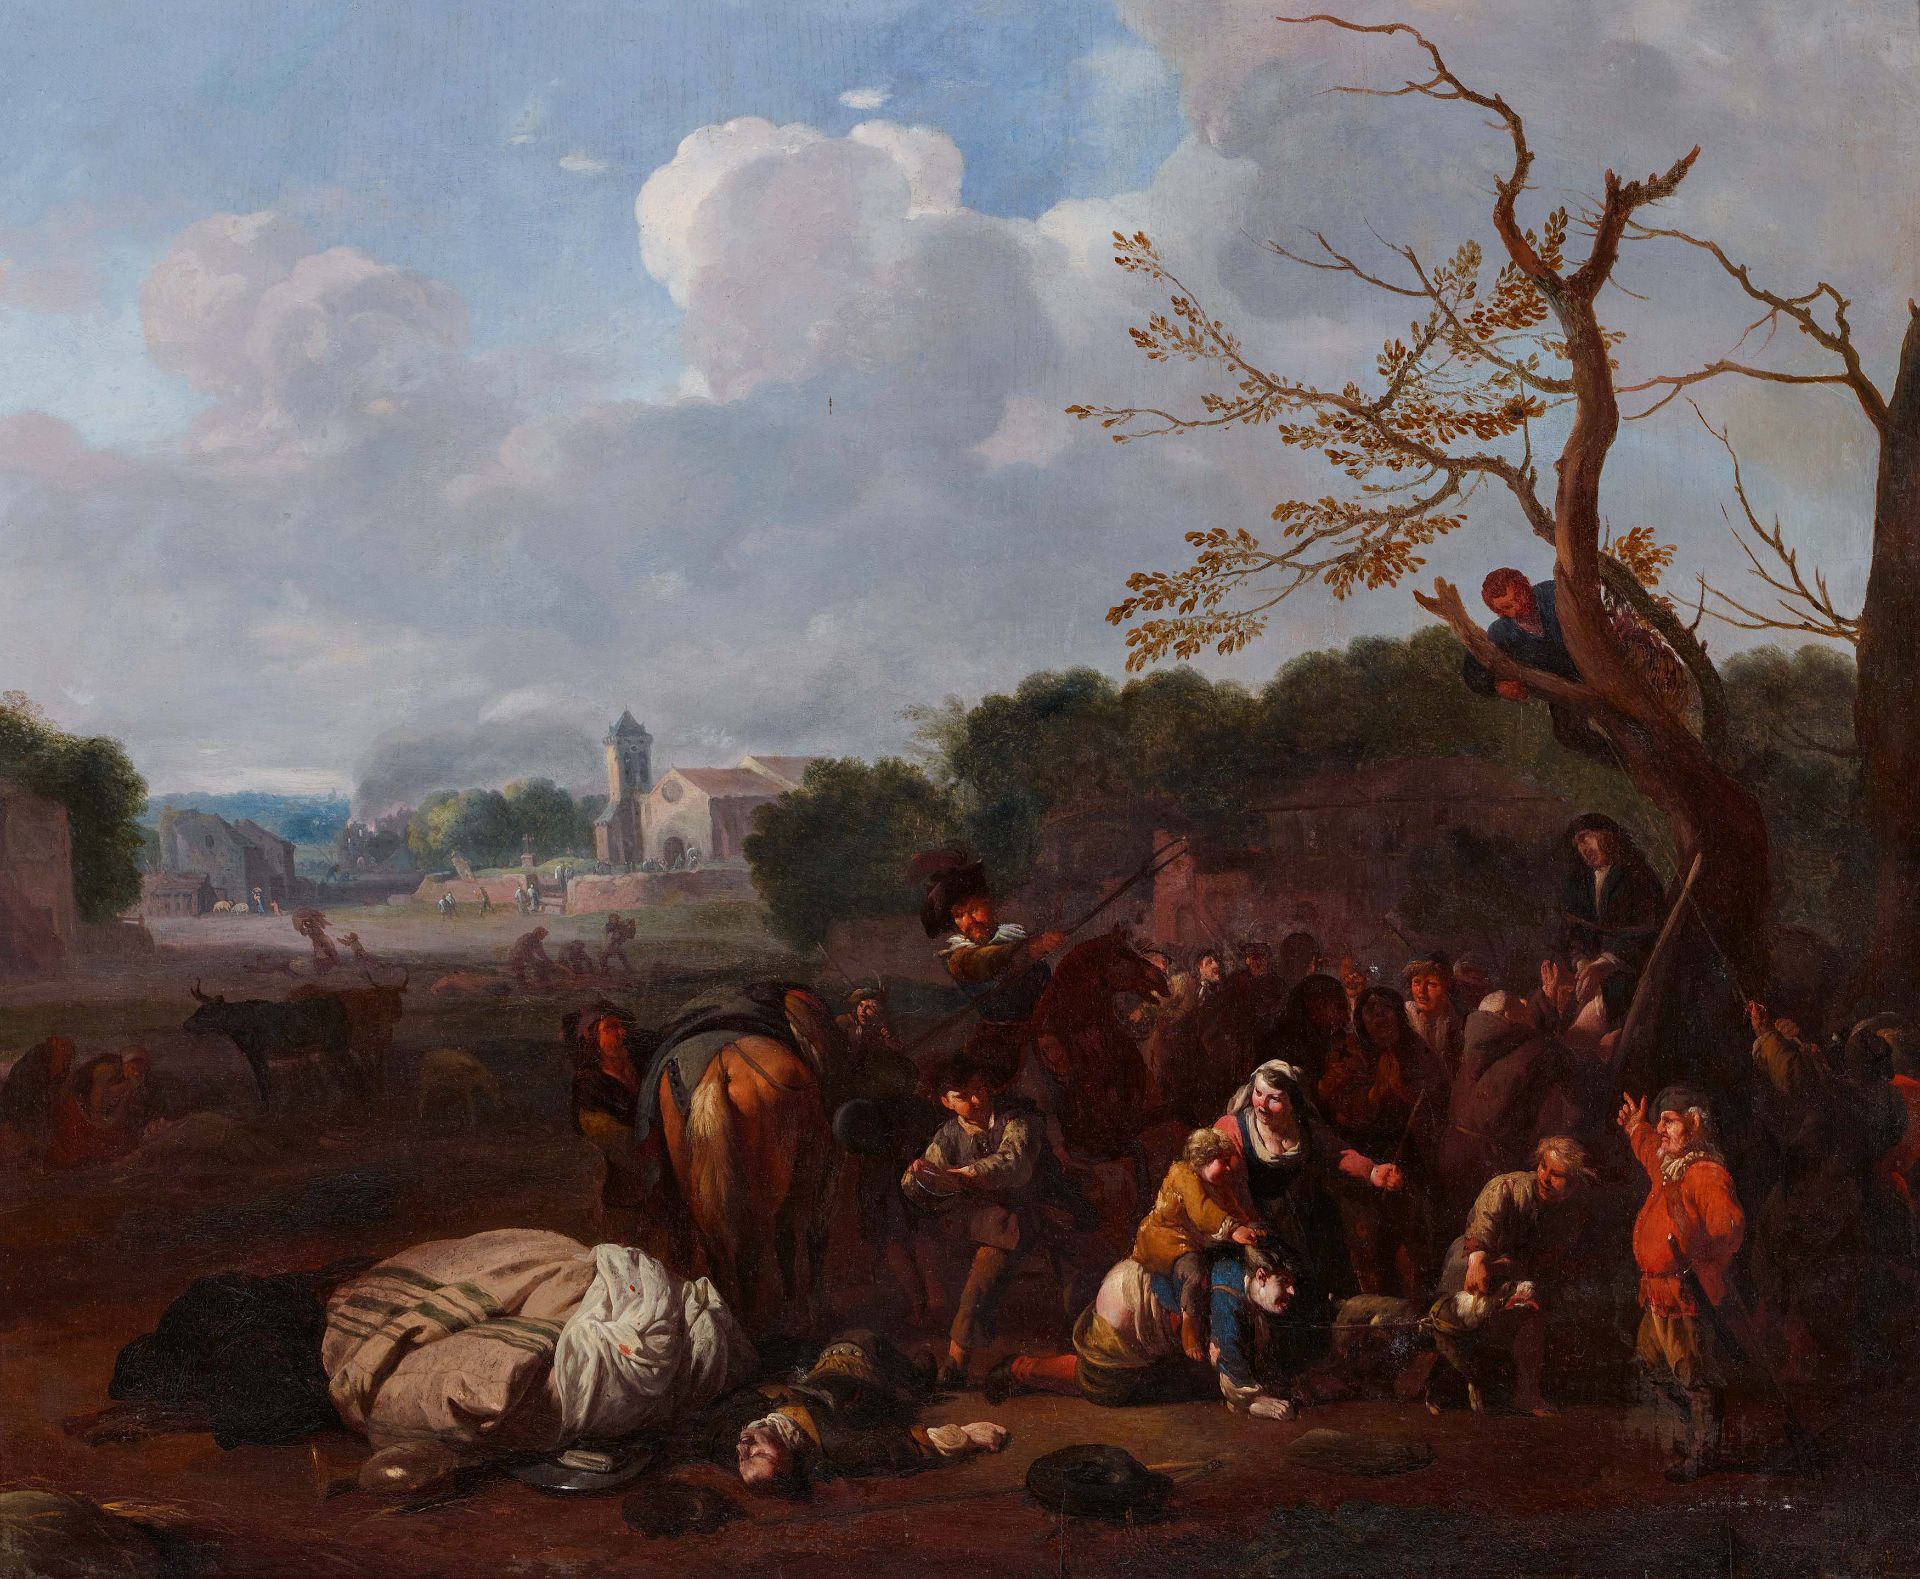 Jan van Huchtenburg: Landscape with the Torture and Execution of Prisoners